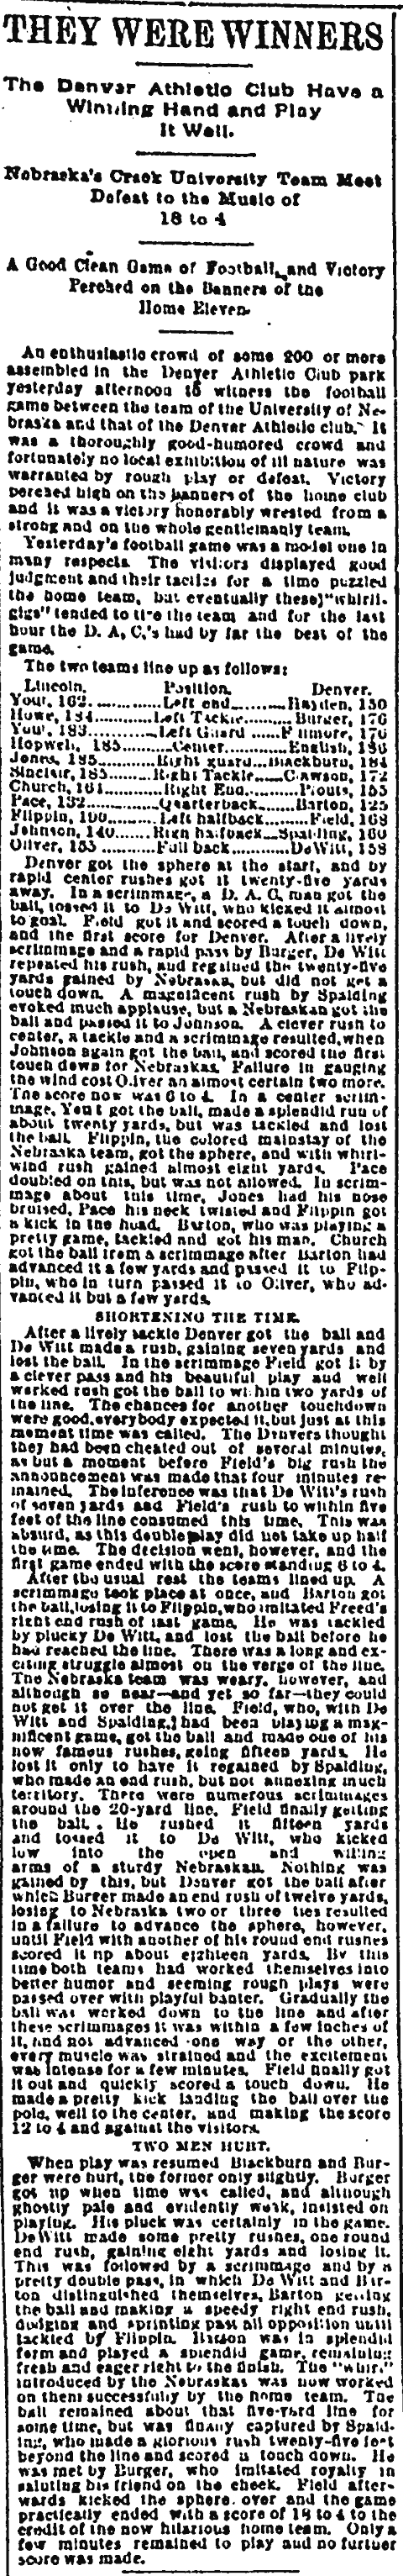 Rocky Mountain News, Nebraska vs. Denver Athletic Club 1892 (175K)